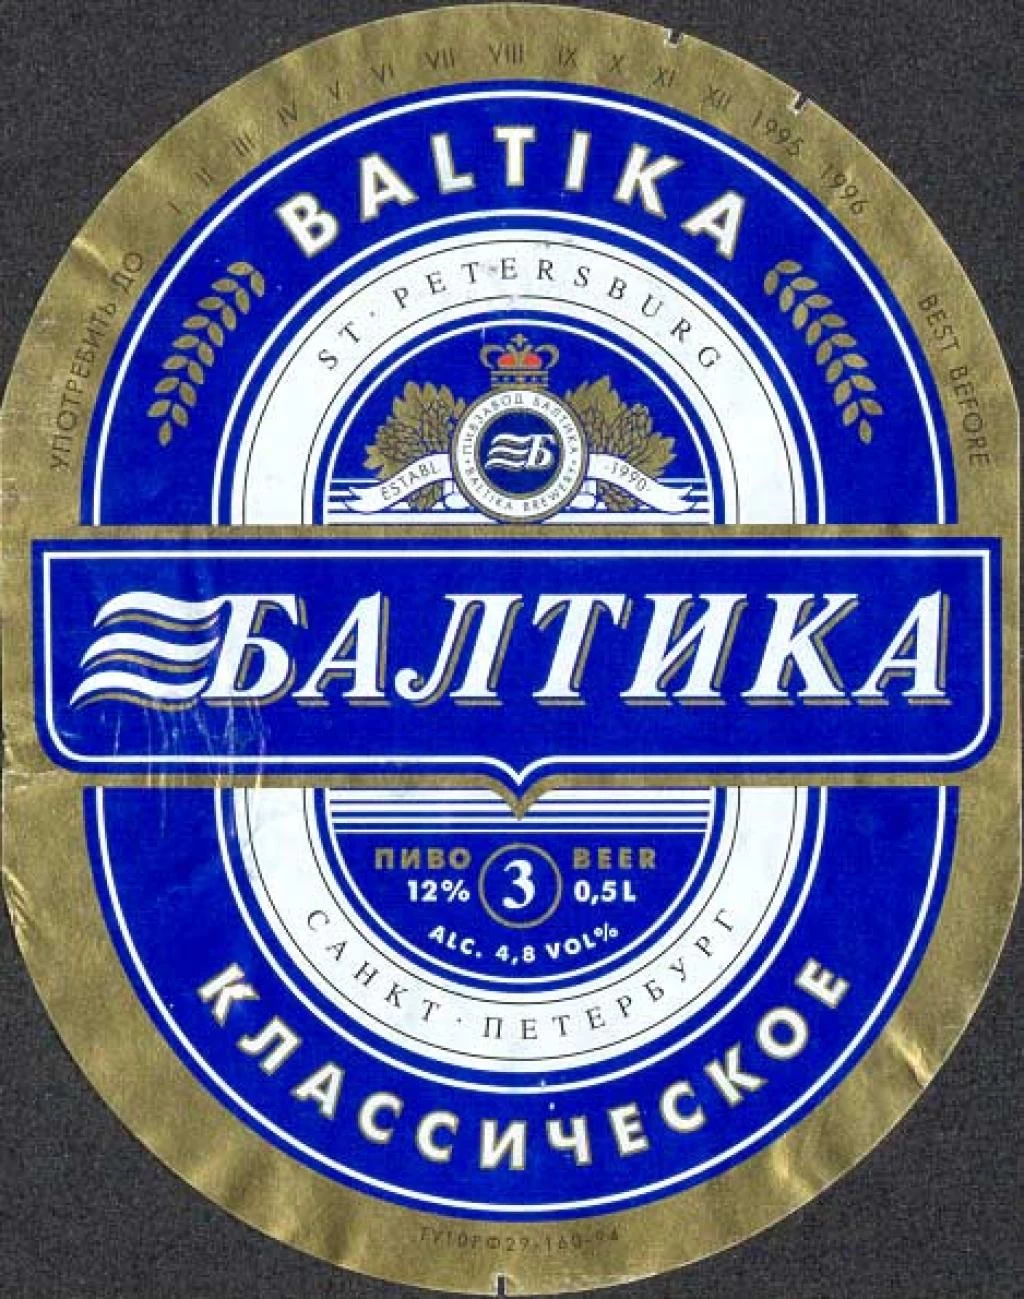 Пиво "Балтика 3 классическое". Фото с сайта Павла Егорова: nubo.ru